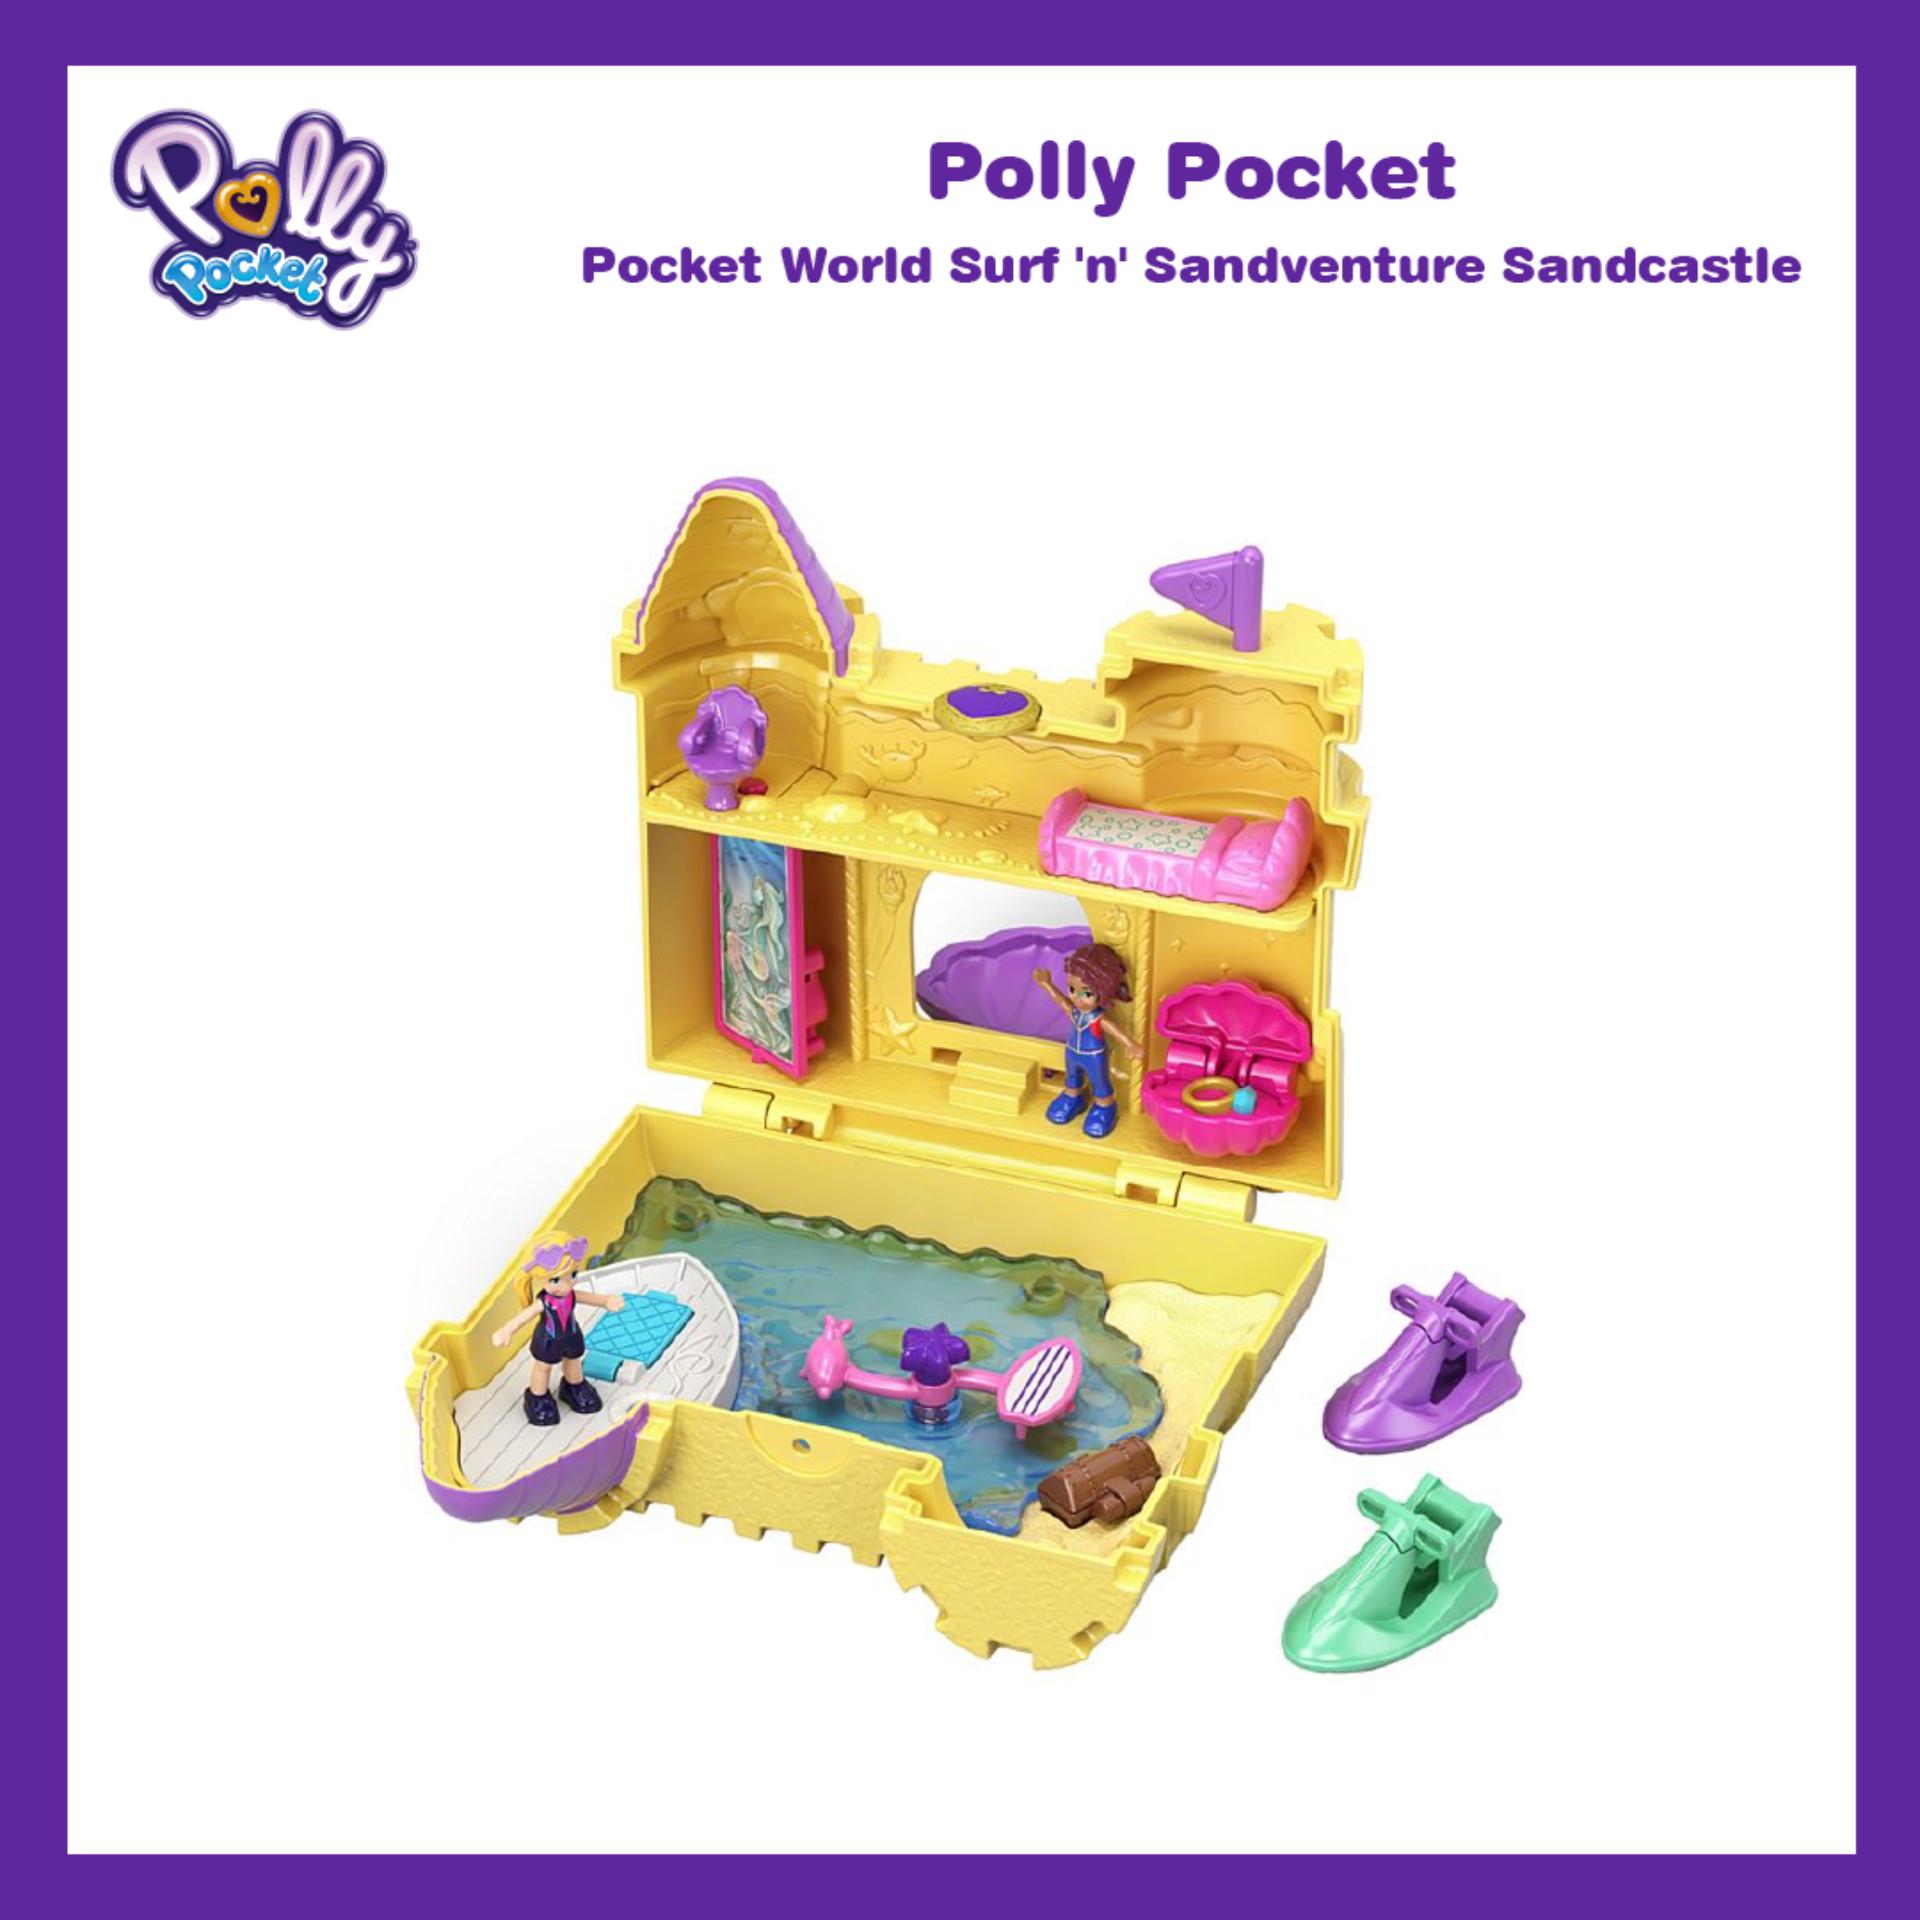 Polly Pocket™ Pocket World Surf 'n' Sandventure Sandcastle พอลลี่ พ็อคเก็ต เซิร์ฟ แอนด์ แซนด์เวนเจอร์ ปราสาททราย (ของเล่นเด็ก, ตุ๊กตา)